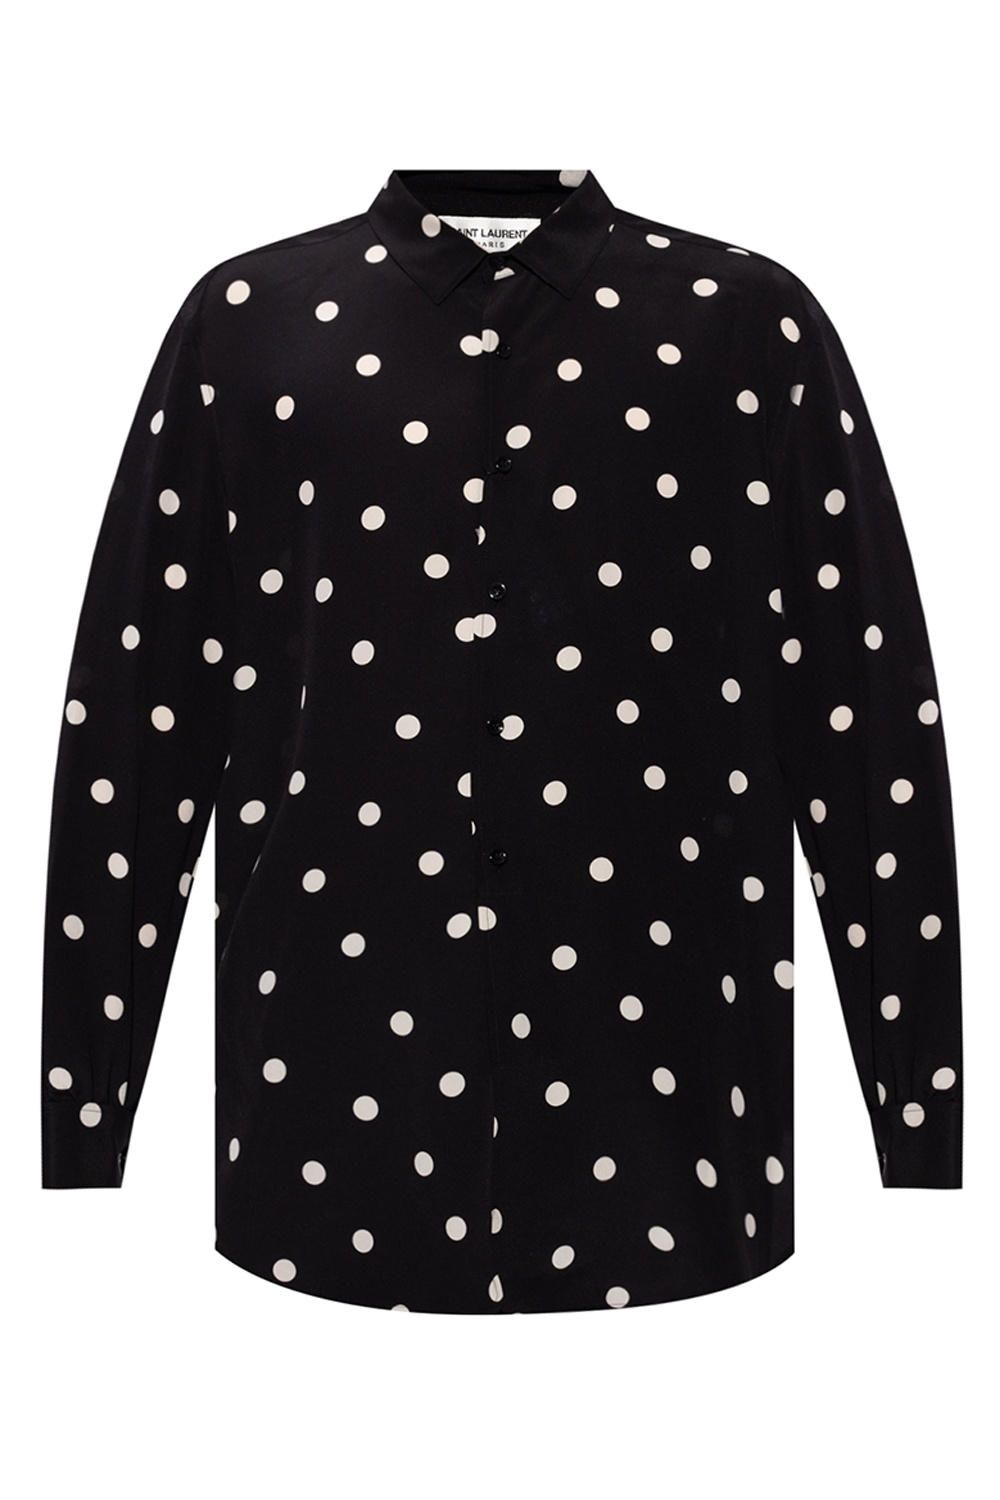 Saint Laurent Polka dot shirt | Men's Clothing | Vitkac